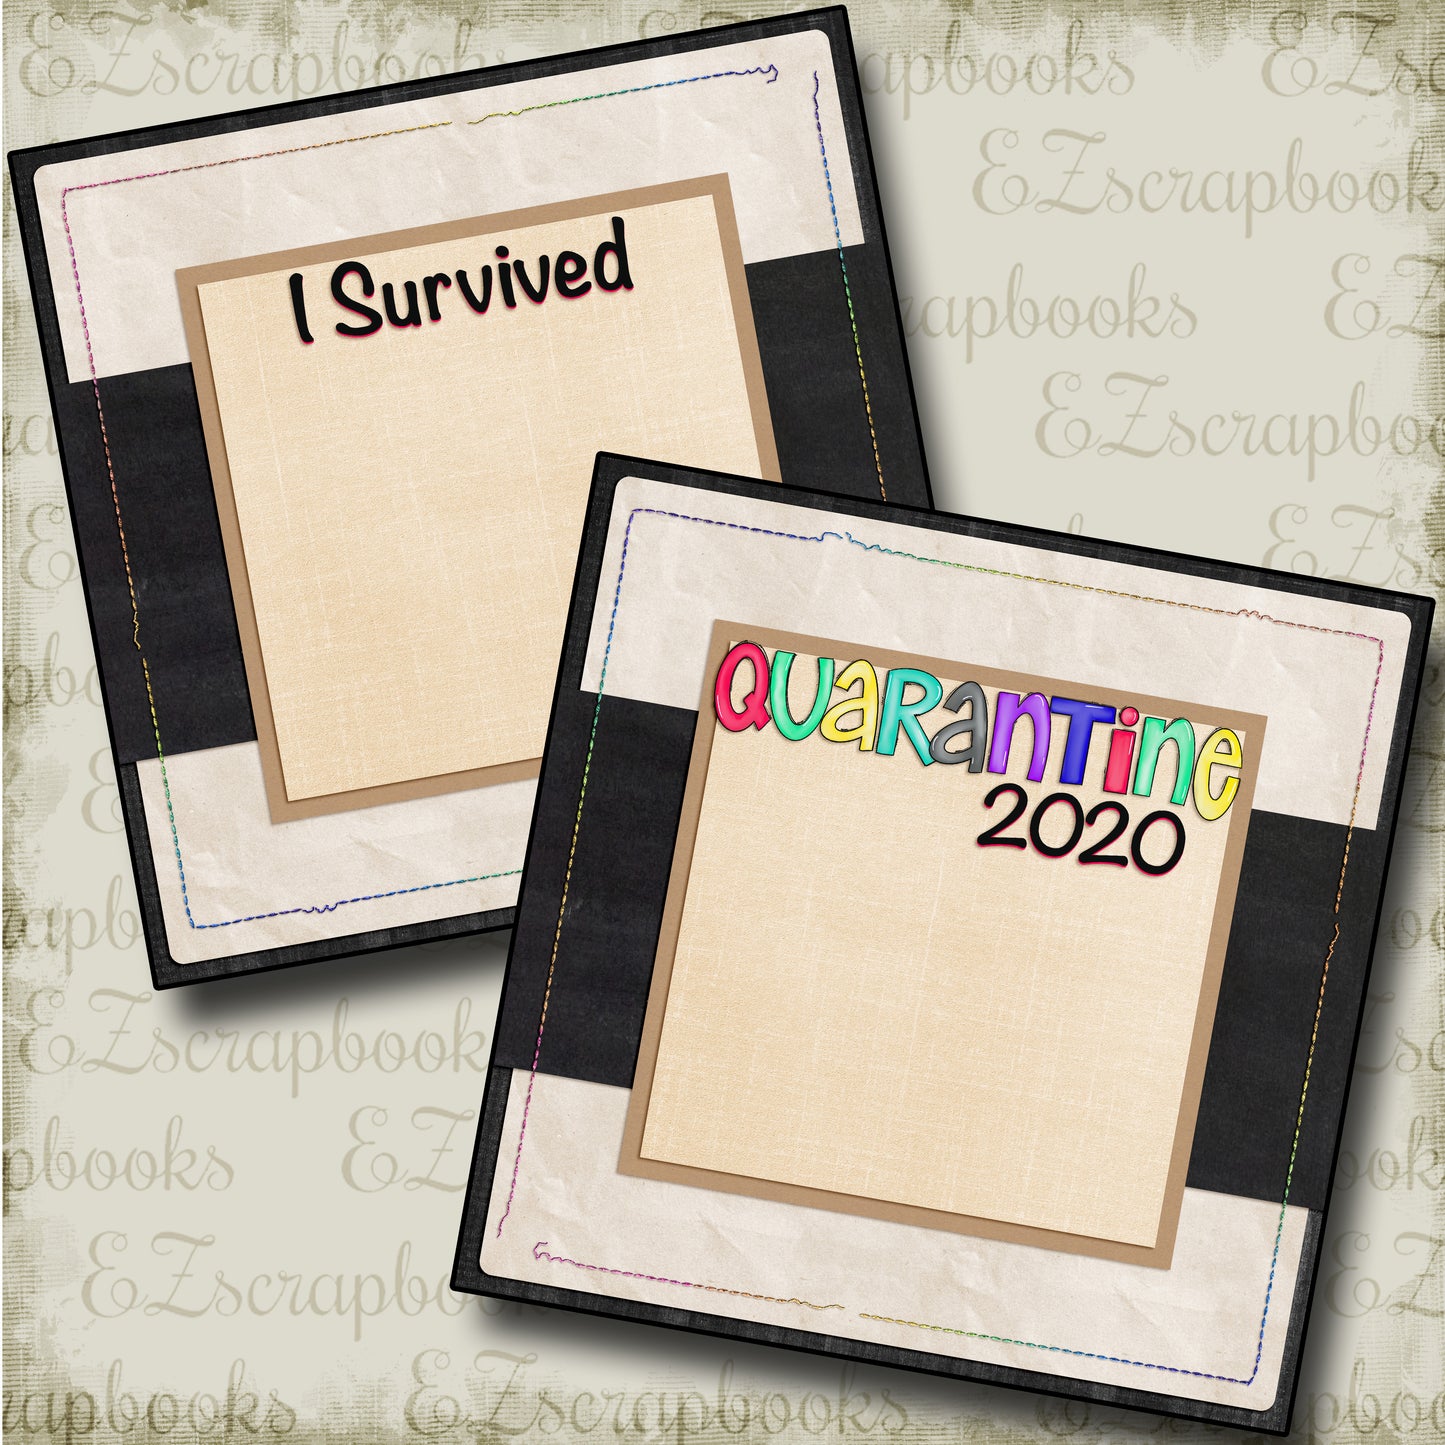 I Survived Quarantine 2020 NPM - 4713 - EZscrapbooks Scrapbook Layouts covid, Quarantine-Corona